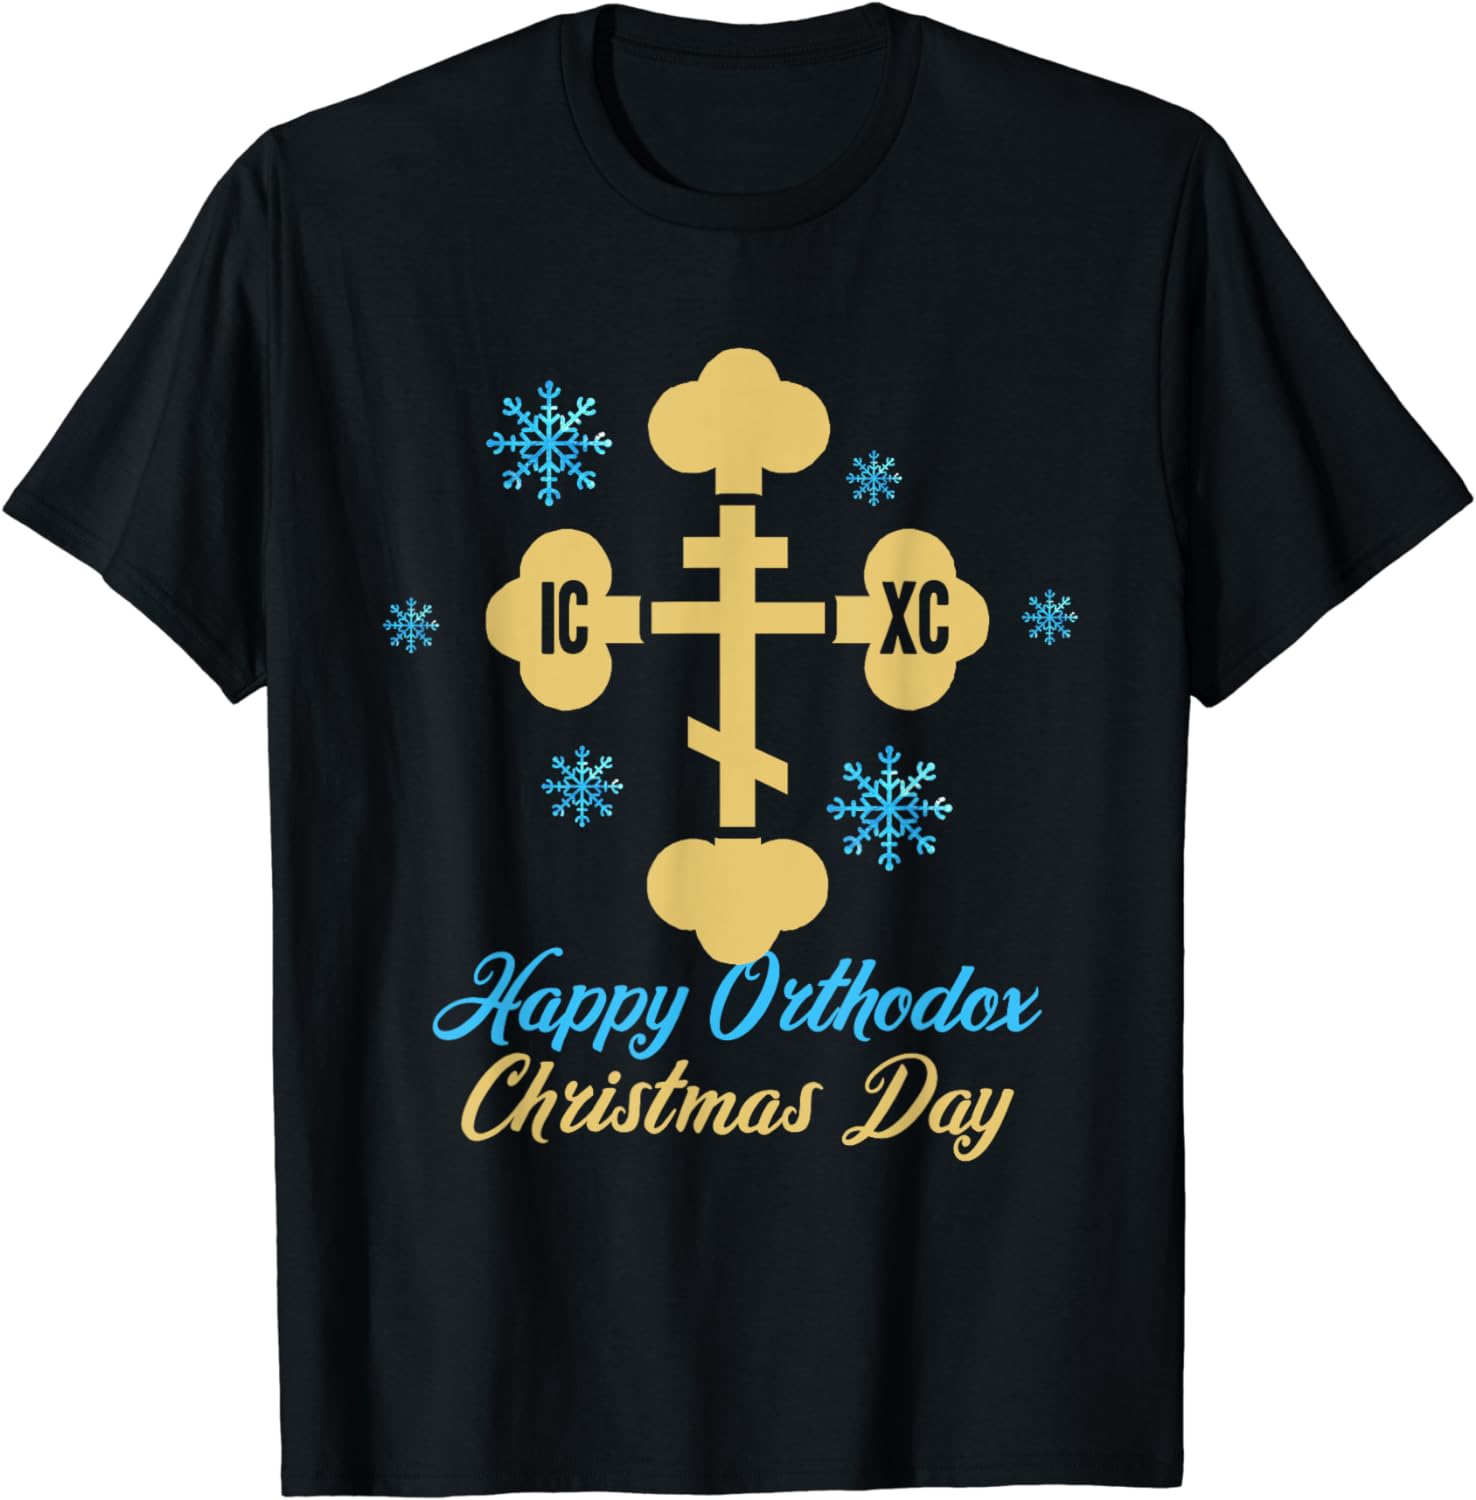 Happy Orthodox Christmas Day Jesus Christ Orthodox Christian T-Shirt ...